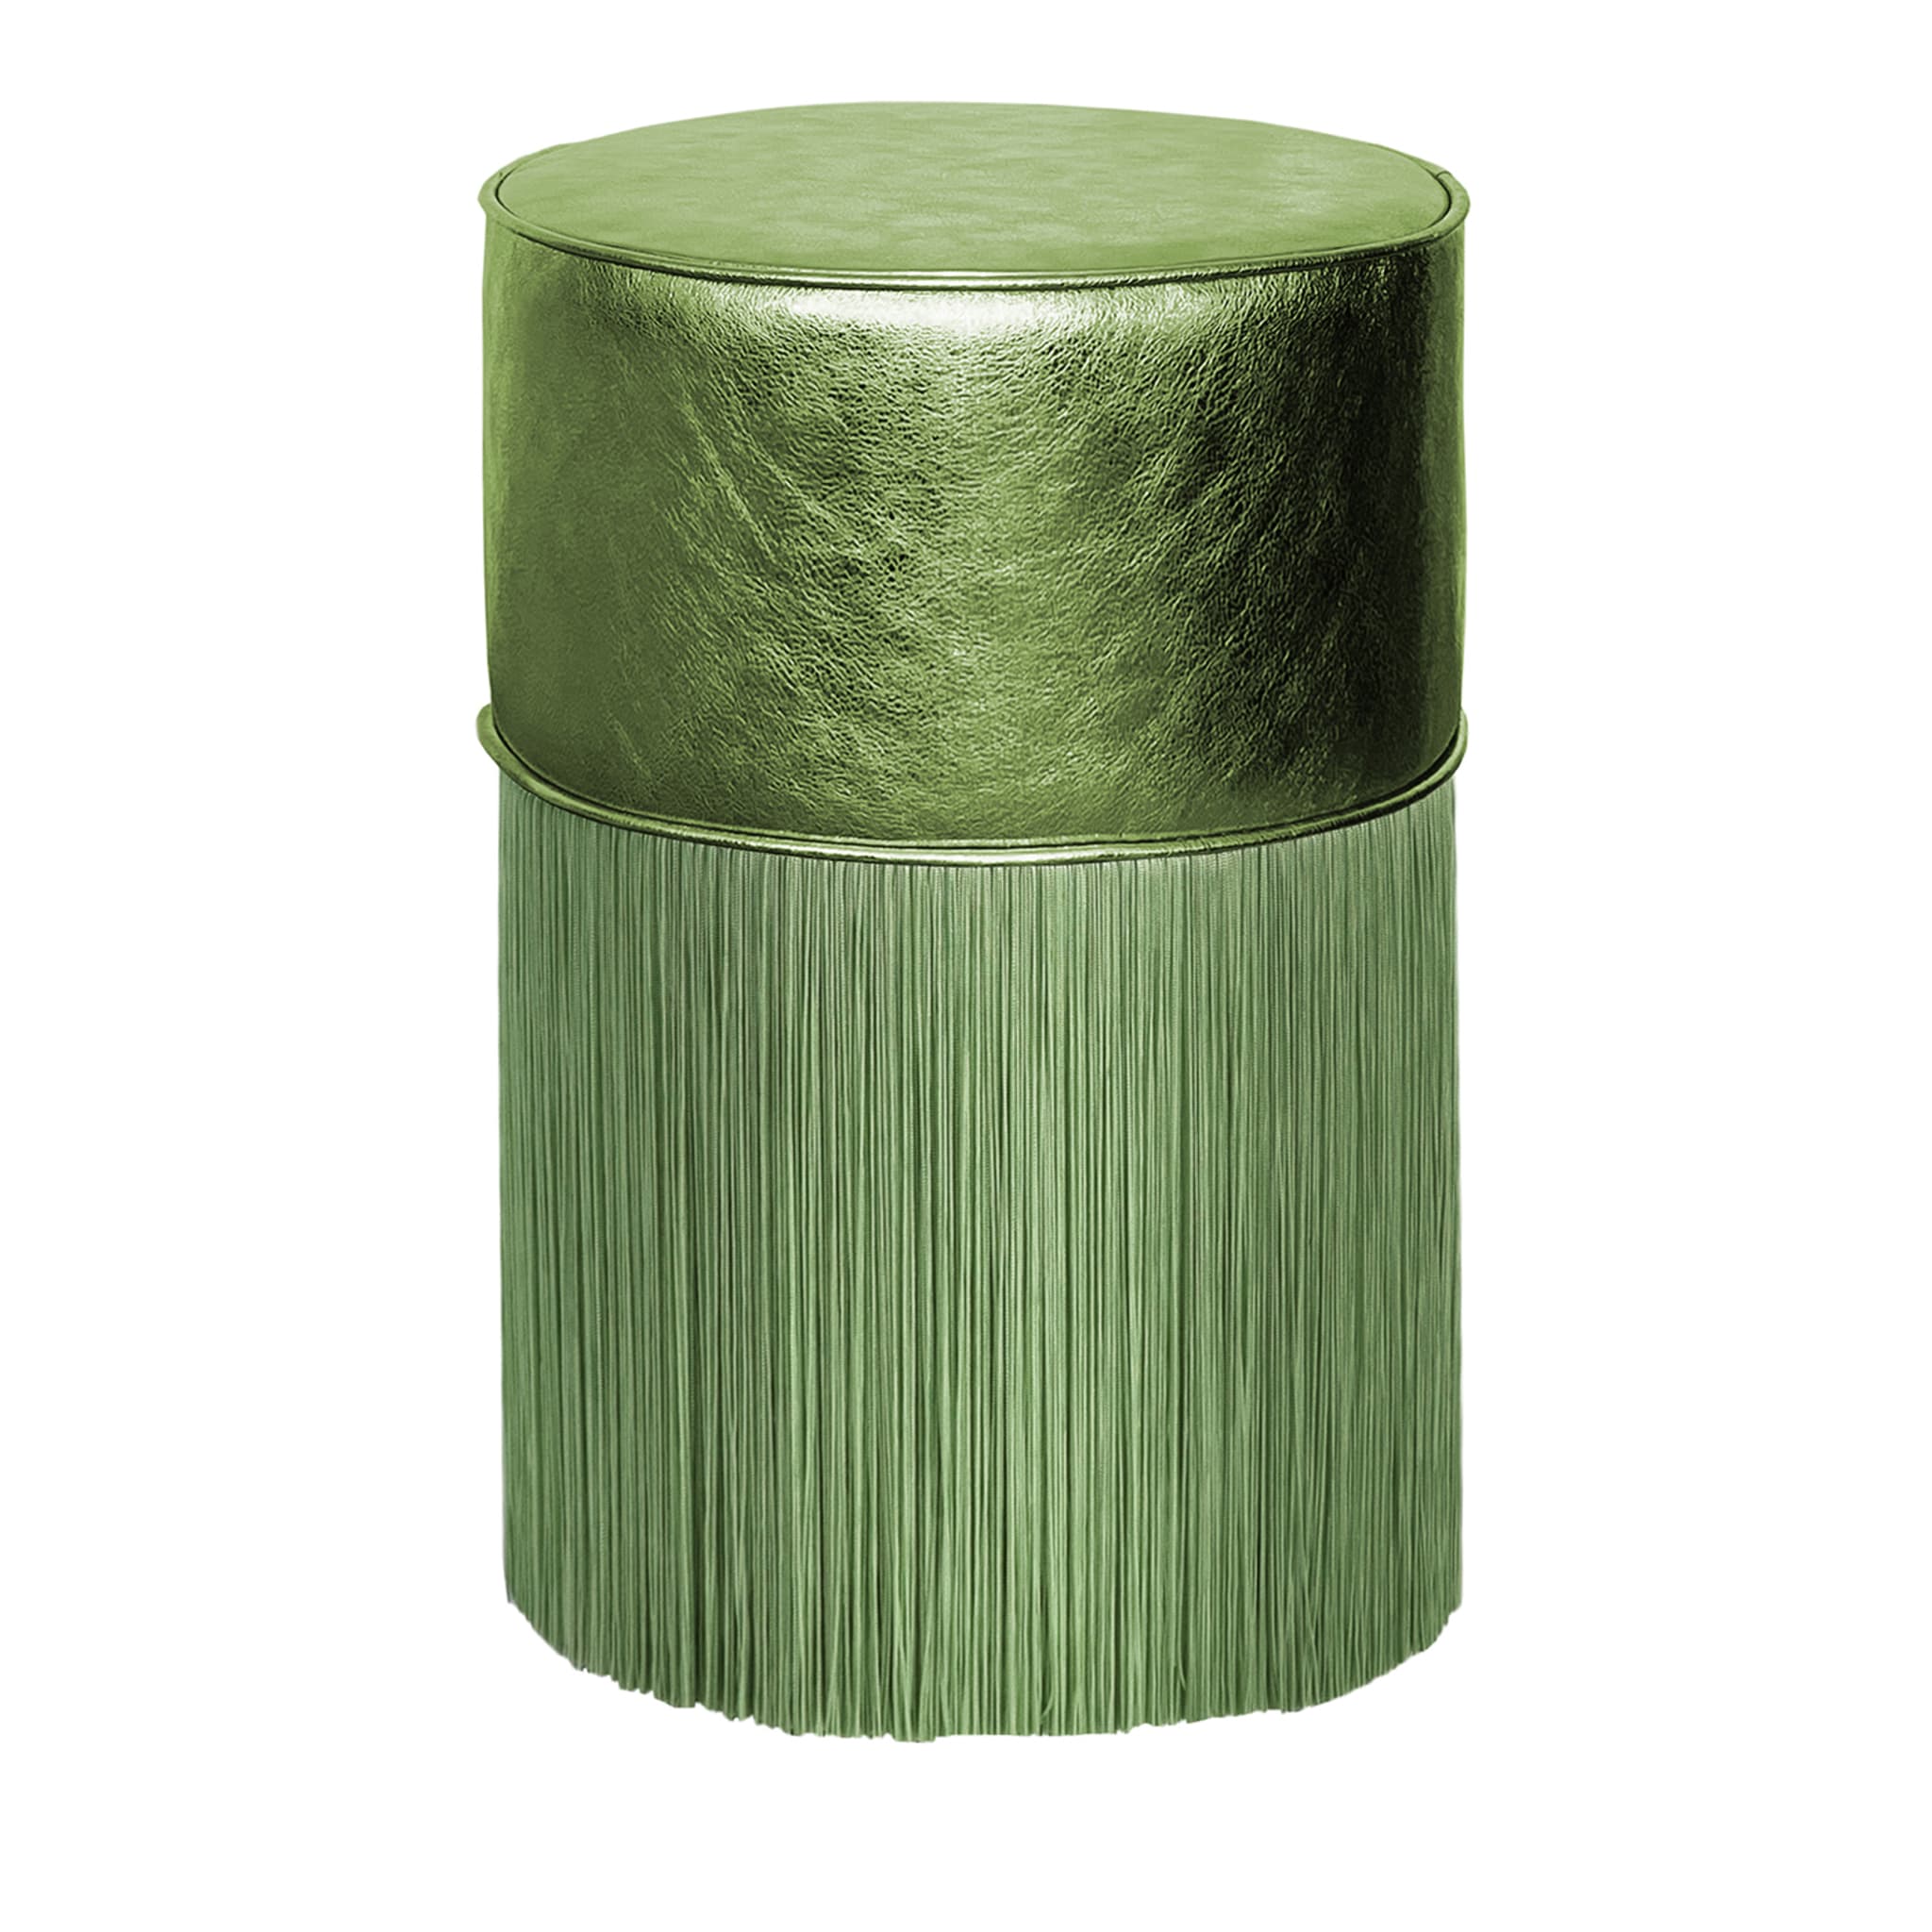 Pouf en cuir métallisé vert brillant de Lorenza Bozzoli - Vue principale